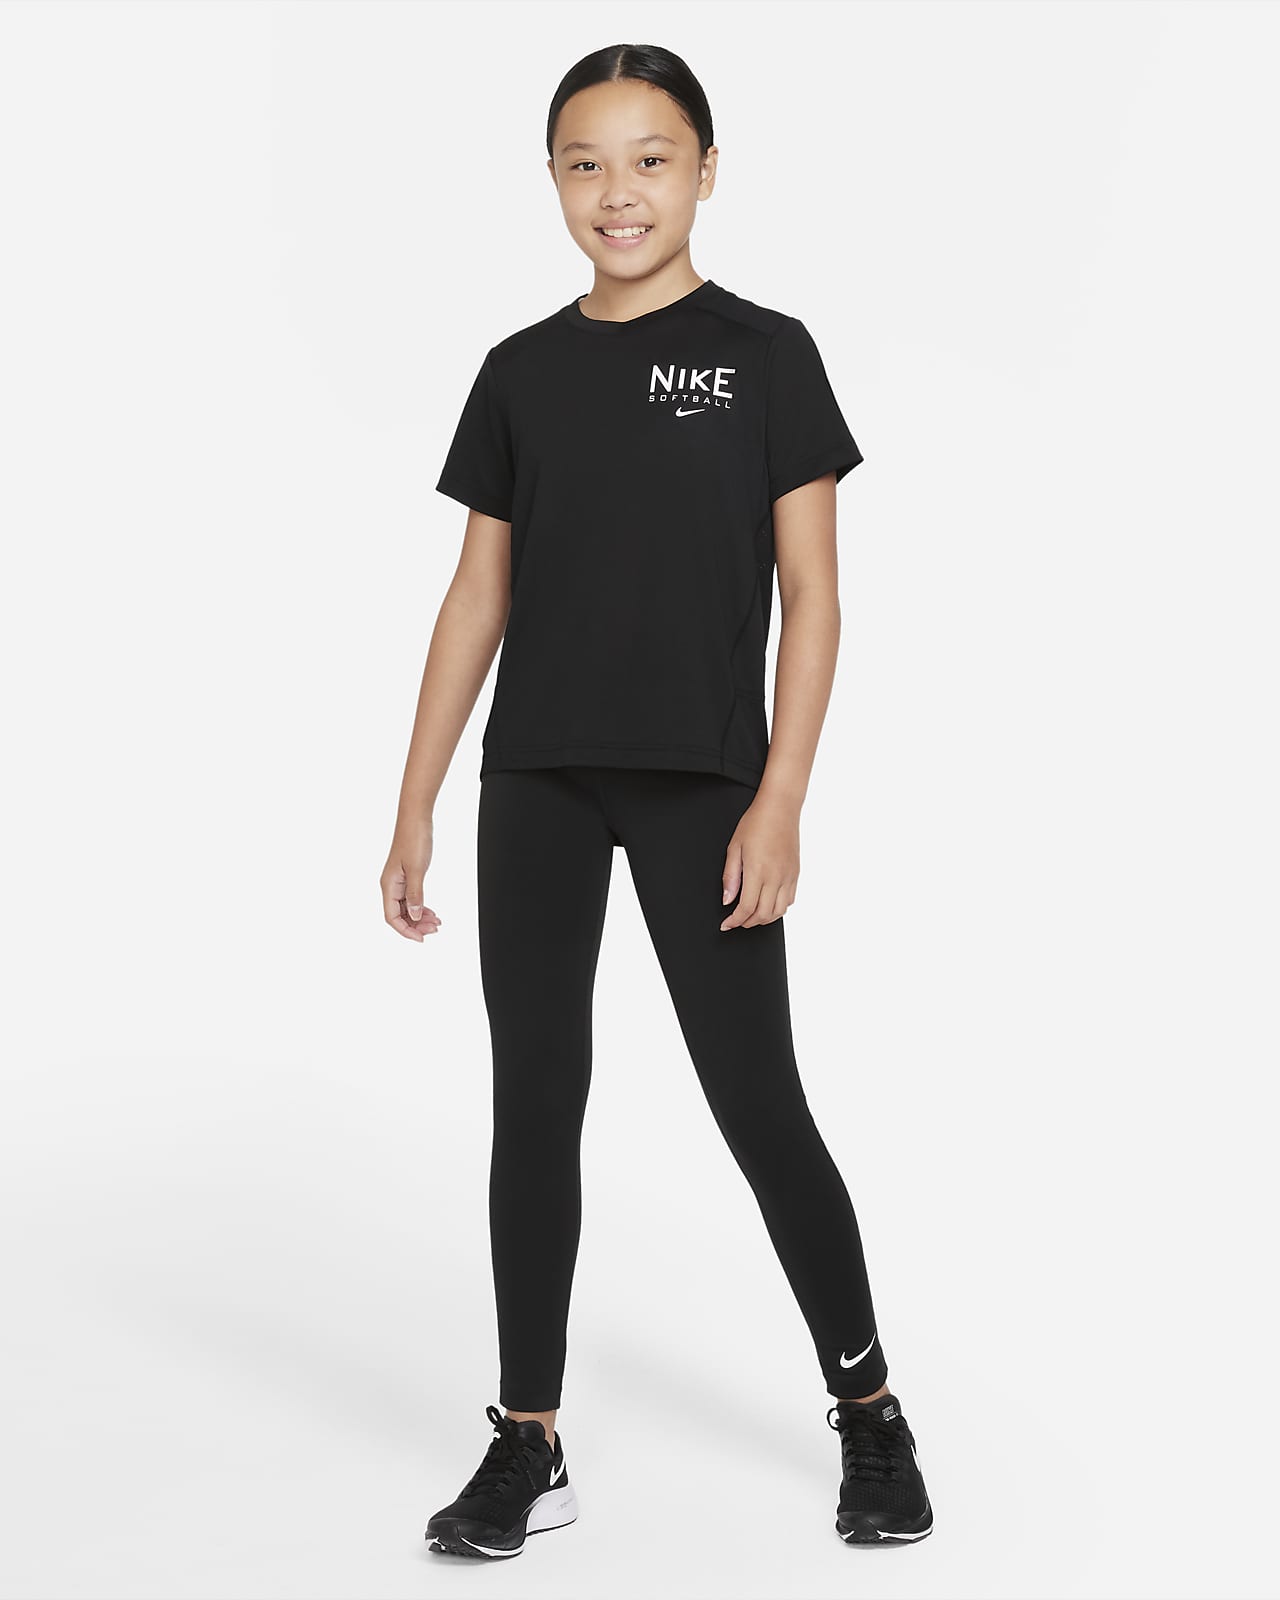 Nike Dri-FIT Practice Big Kids\' Top. Short-Sleeve Softball (Girls\')